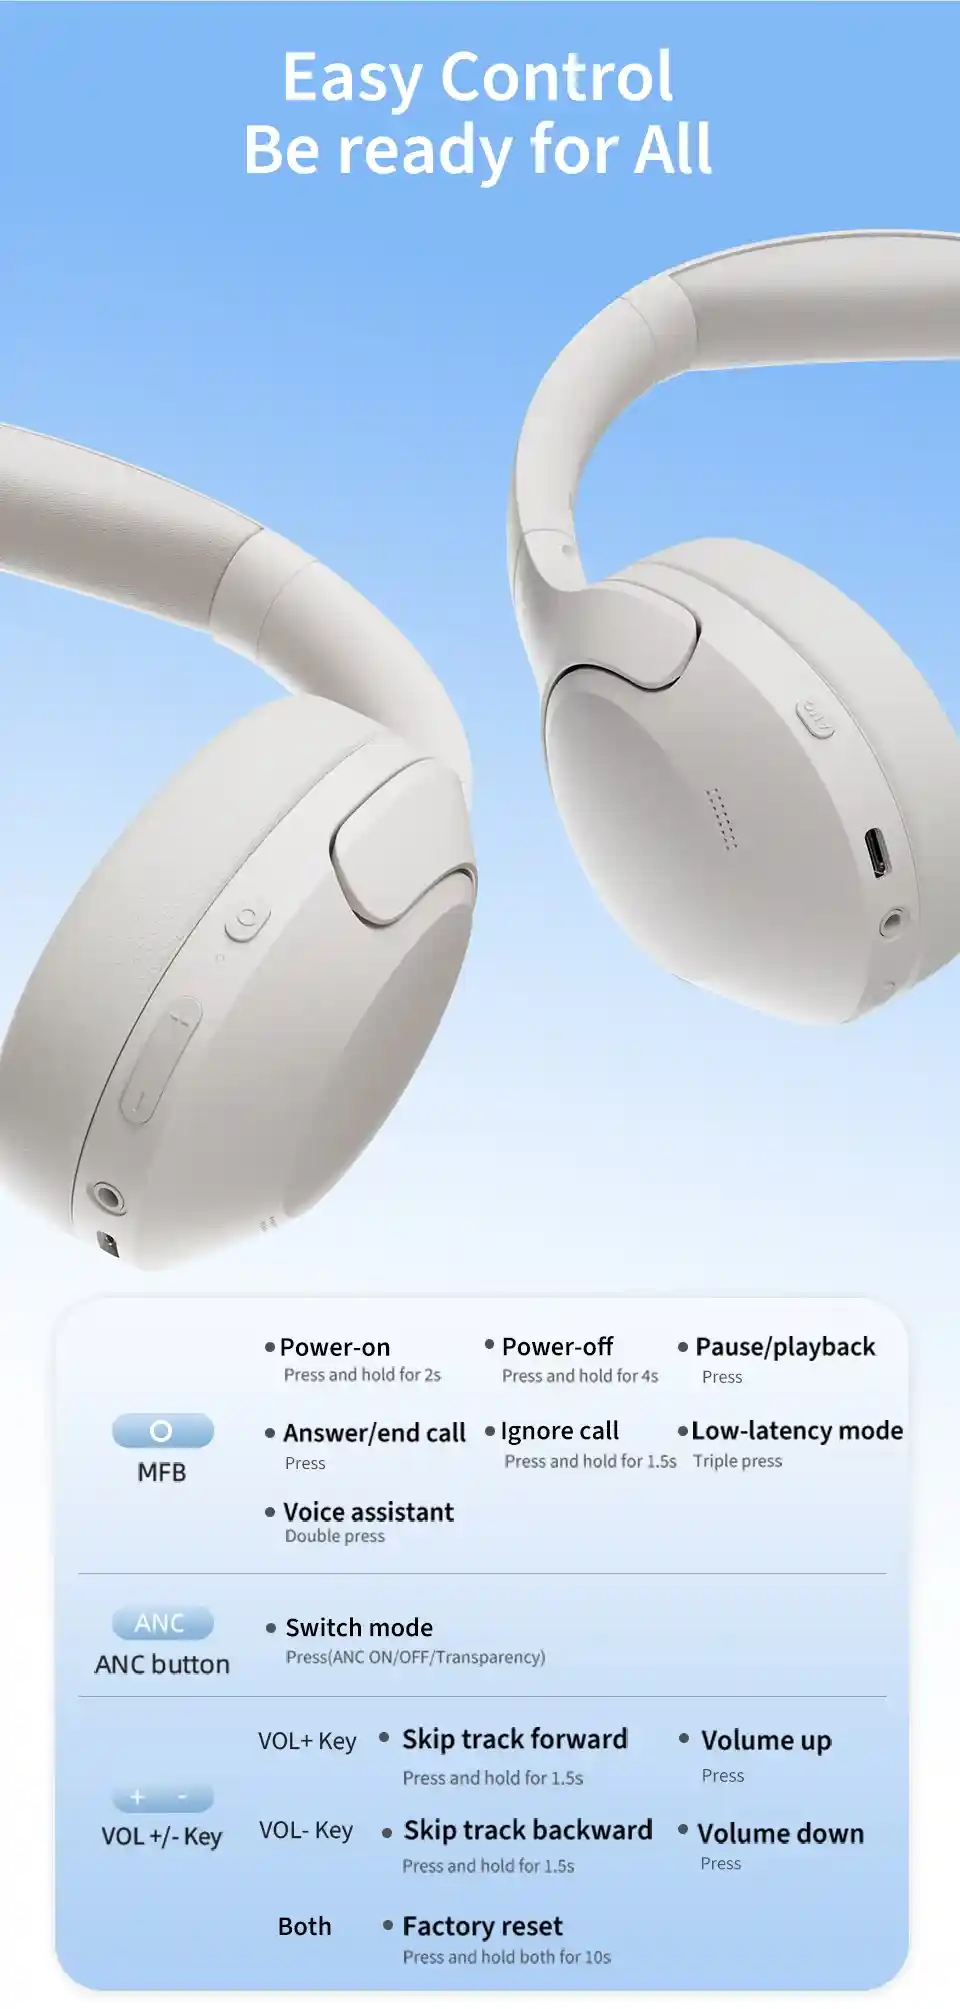 QCY H3 Lite Active Noise Cancelling Headphones